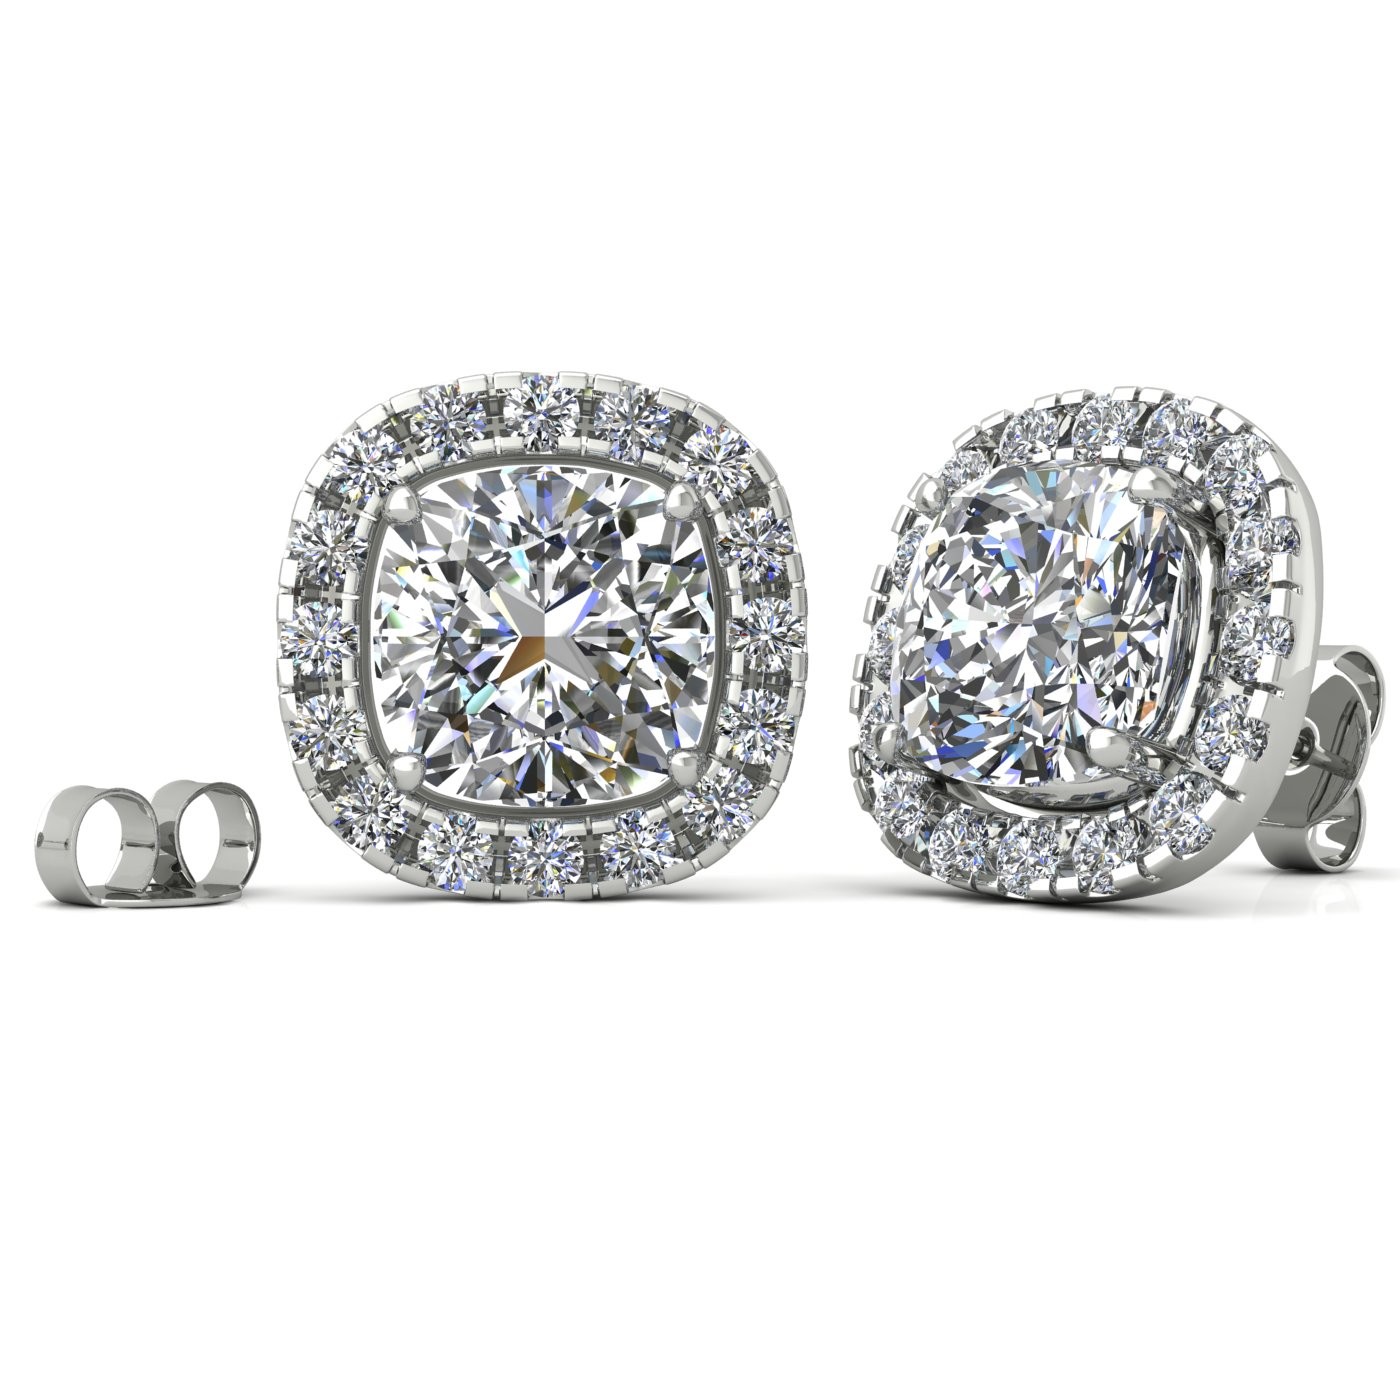 18k white gold  0,7 ct each (1,4 tcw) 4 prongs cushion shape diamond earrings with diamond pavÉ set halo Photos & images